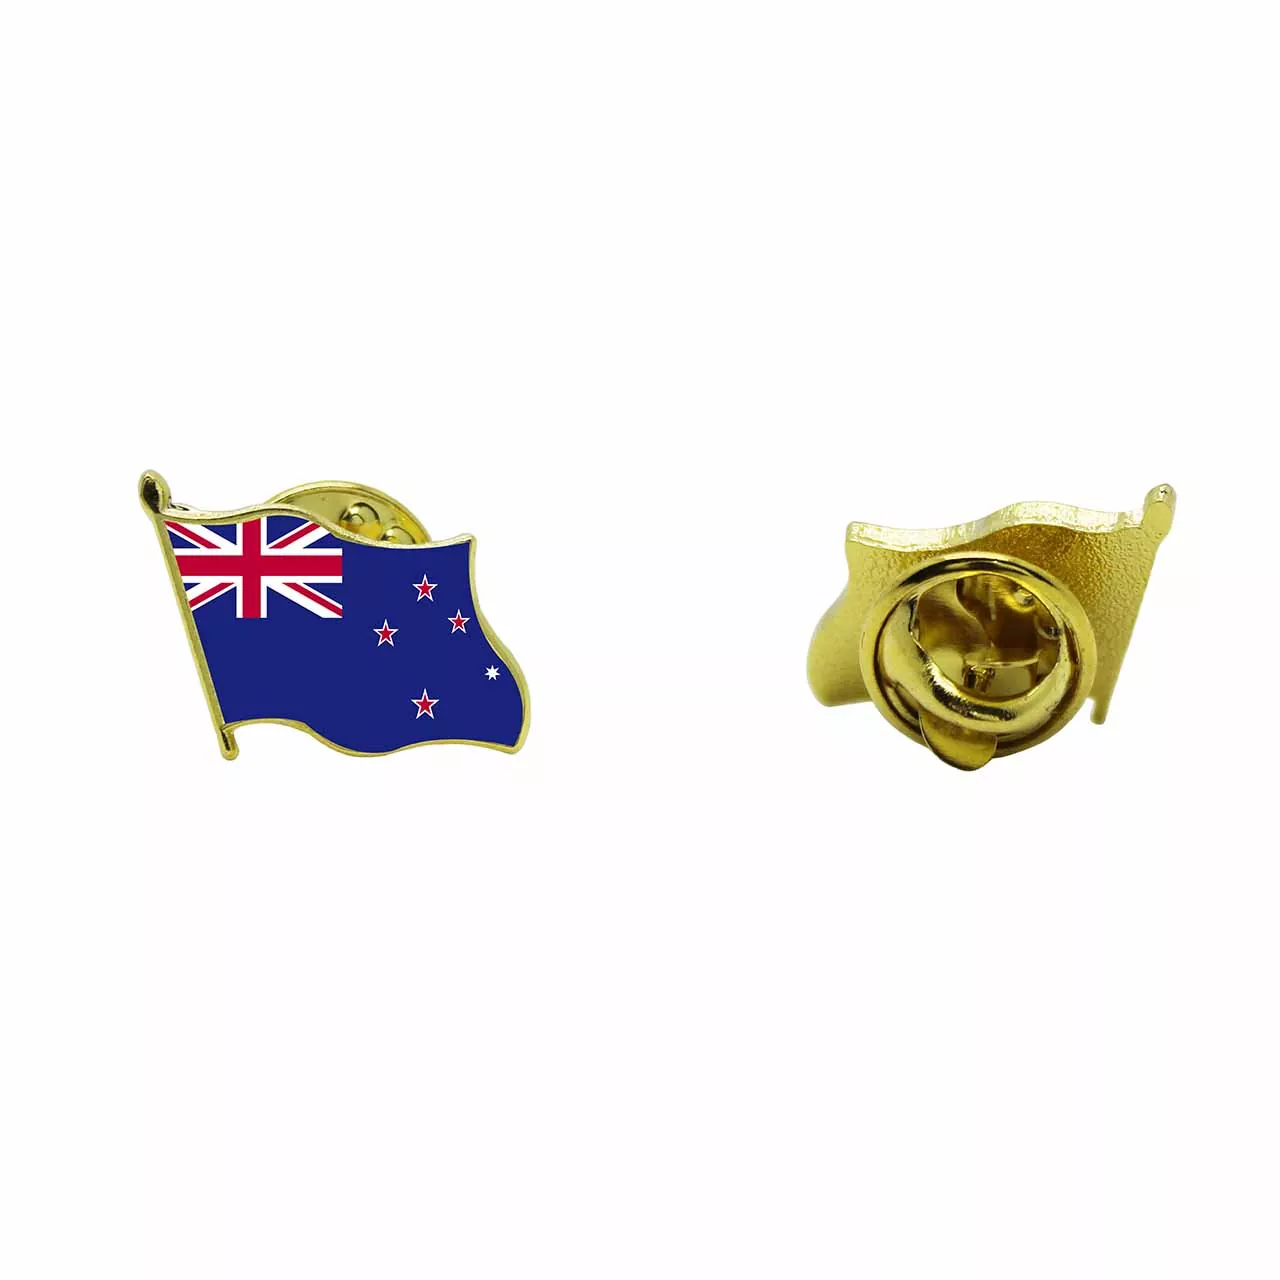 New Zealand National Flag Lapel Pins